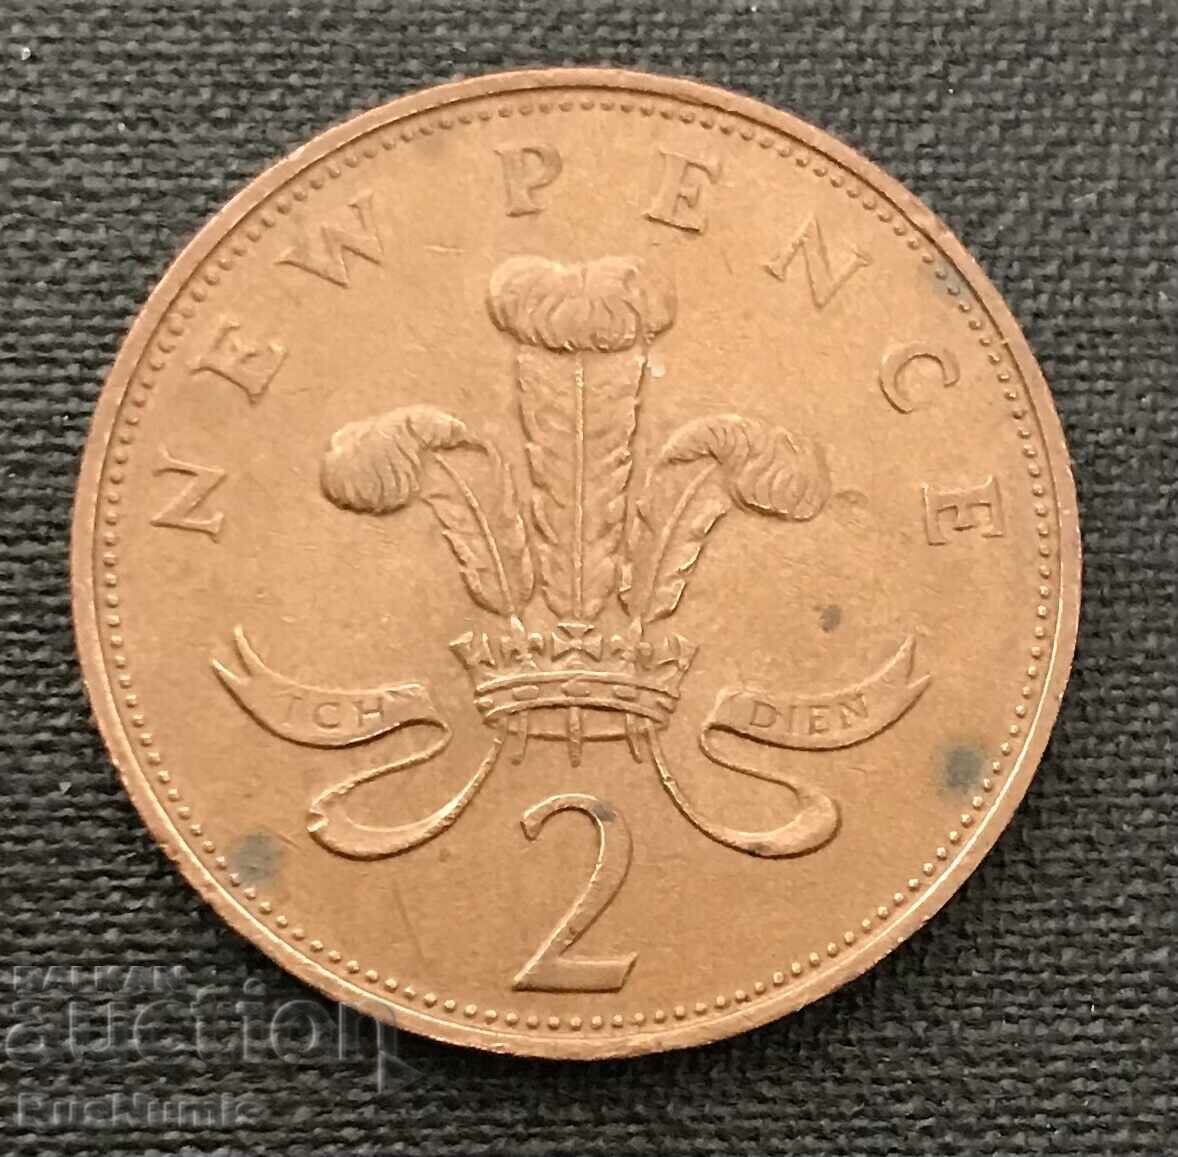 Great Britain. 2 pence 1971